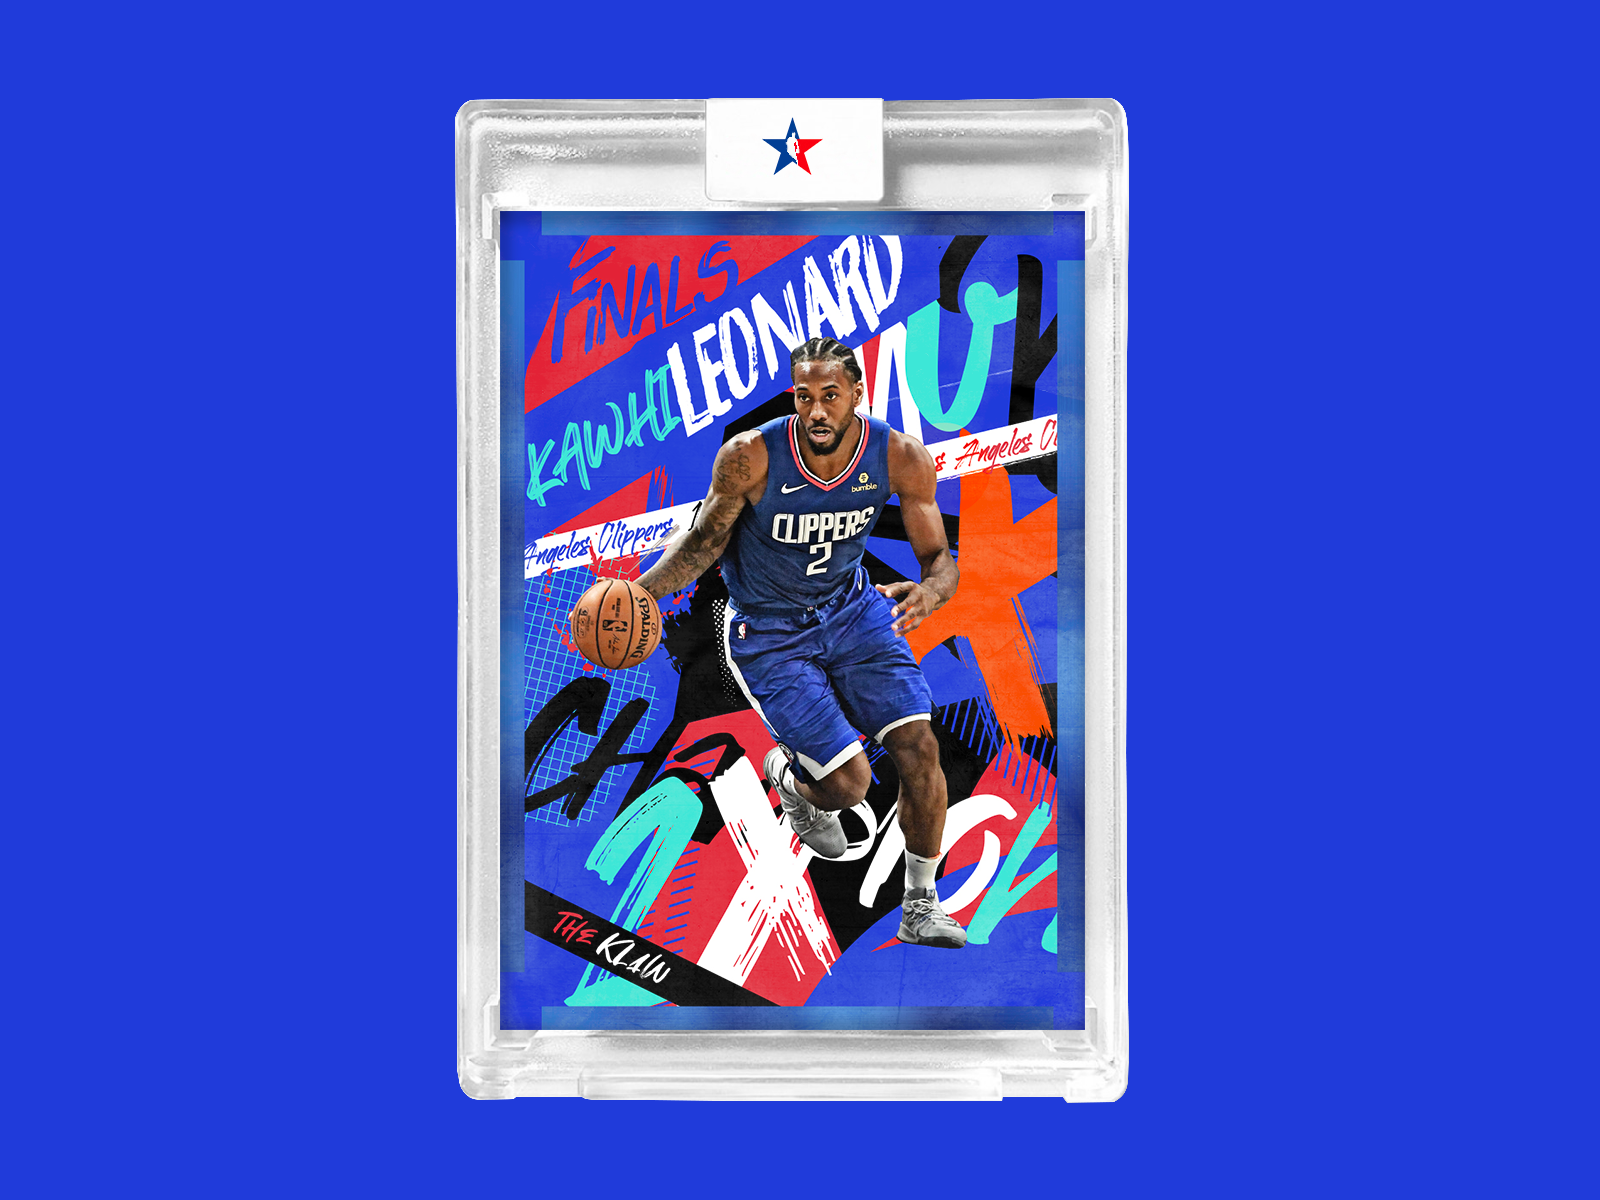 NBA Cards Kawhi Leonard by Neil V Fernando on Dribbble